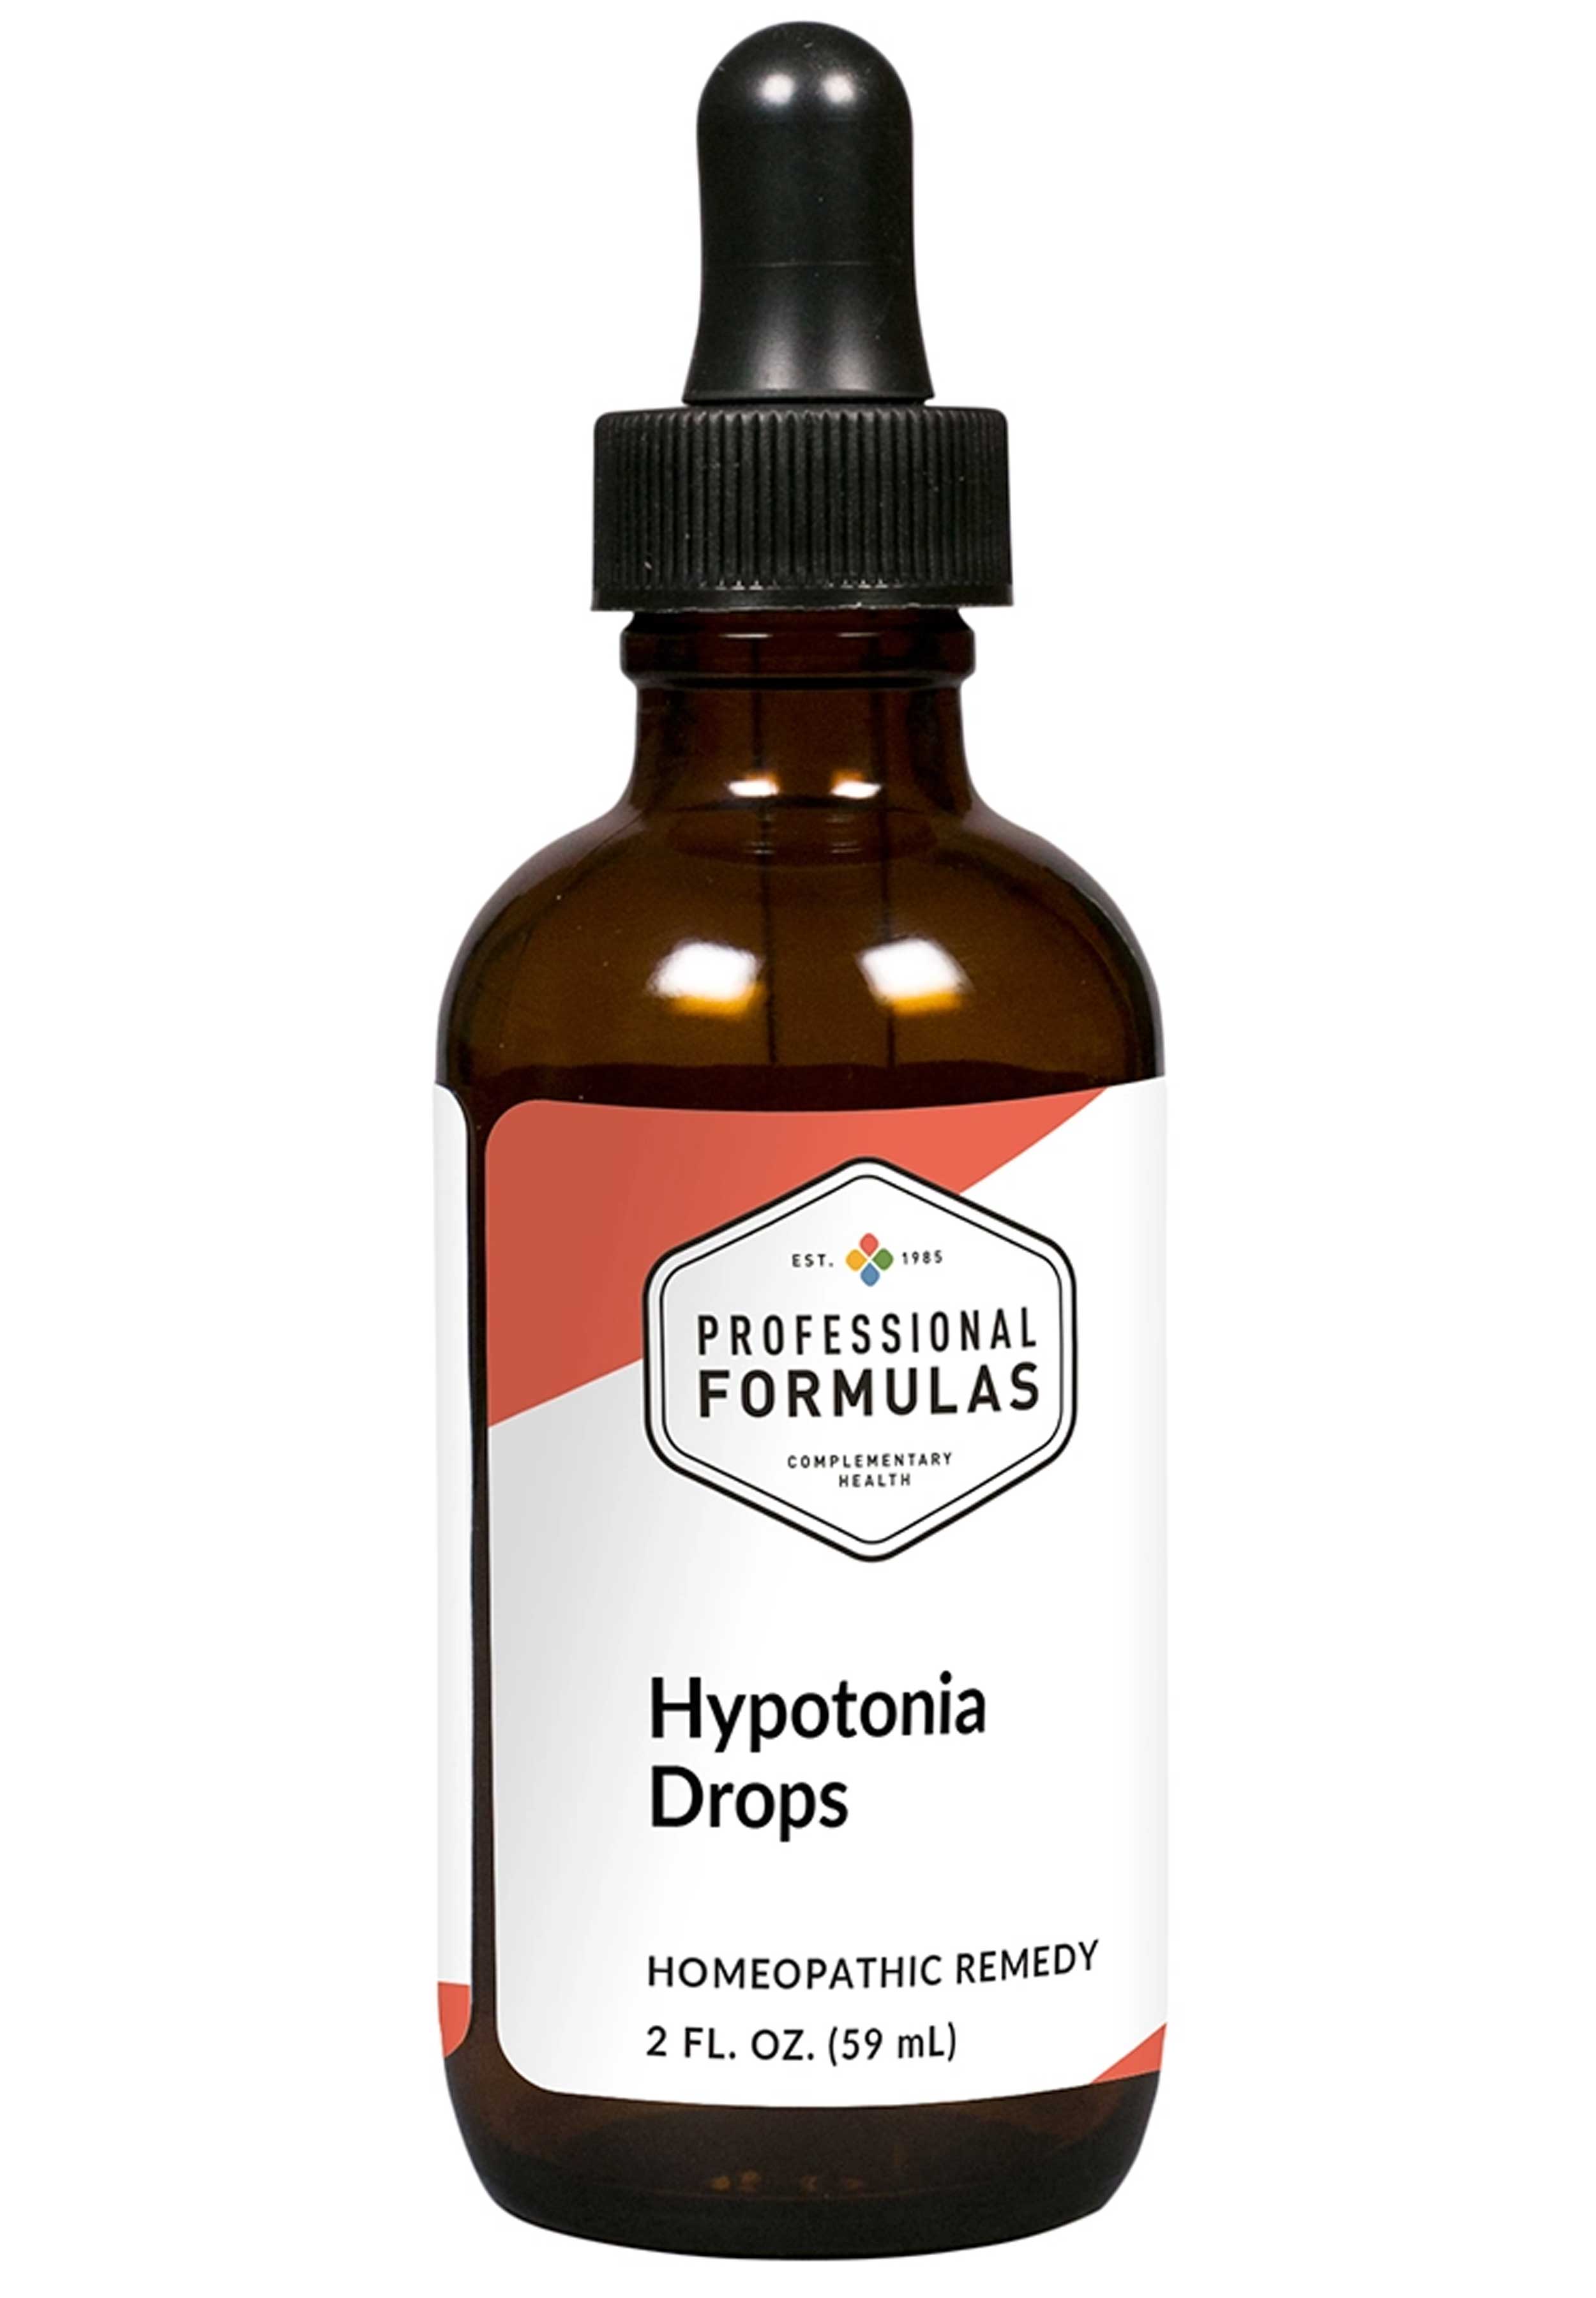 Professional Formulas Hypotonia Drops